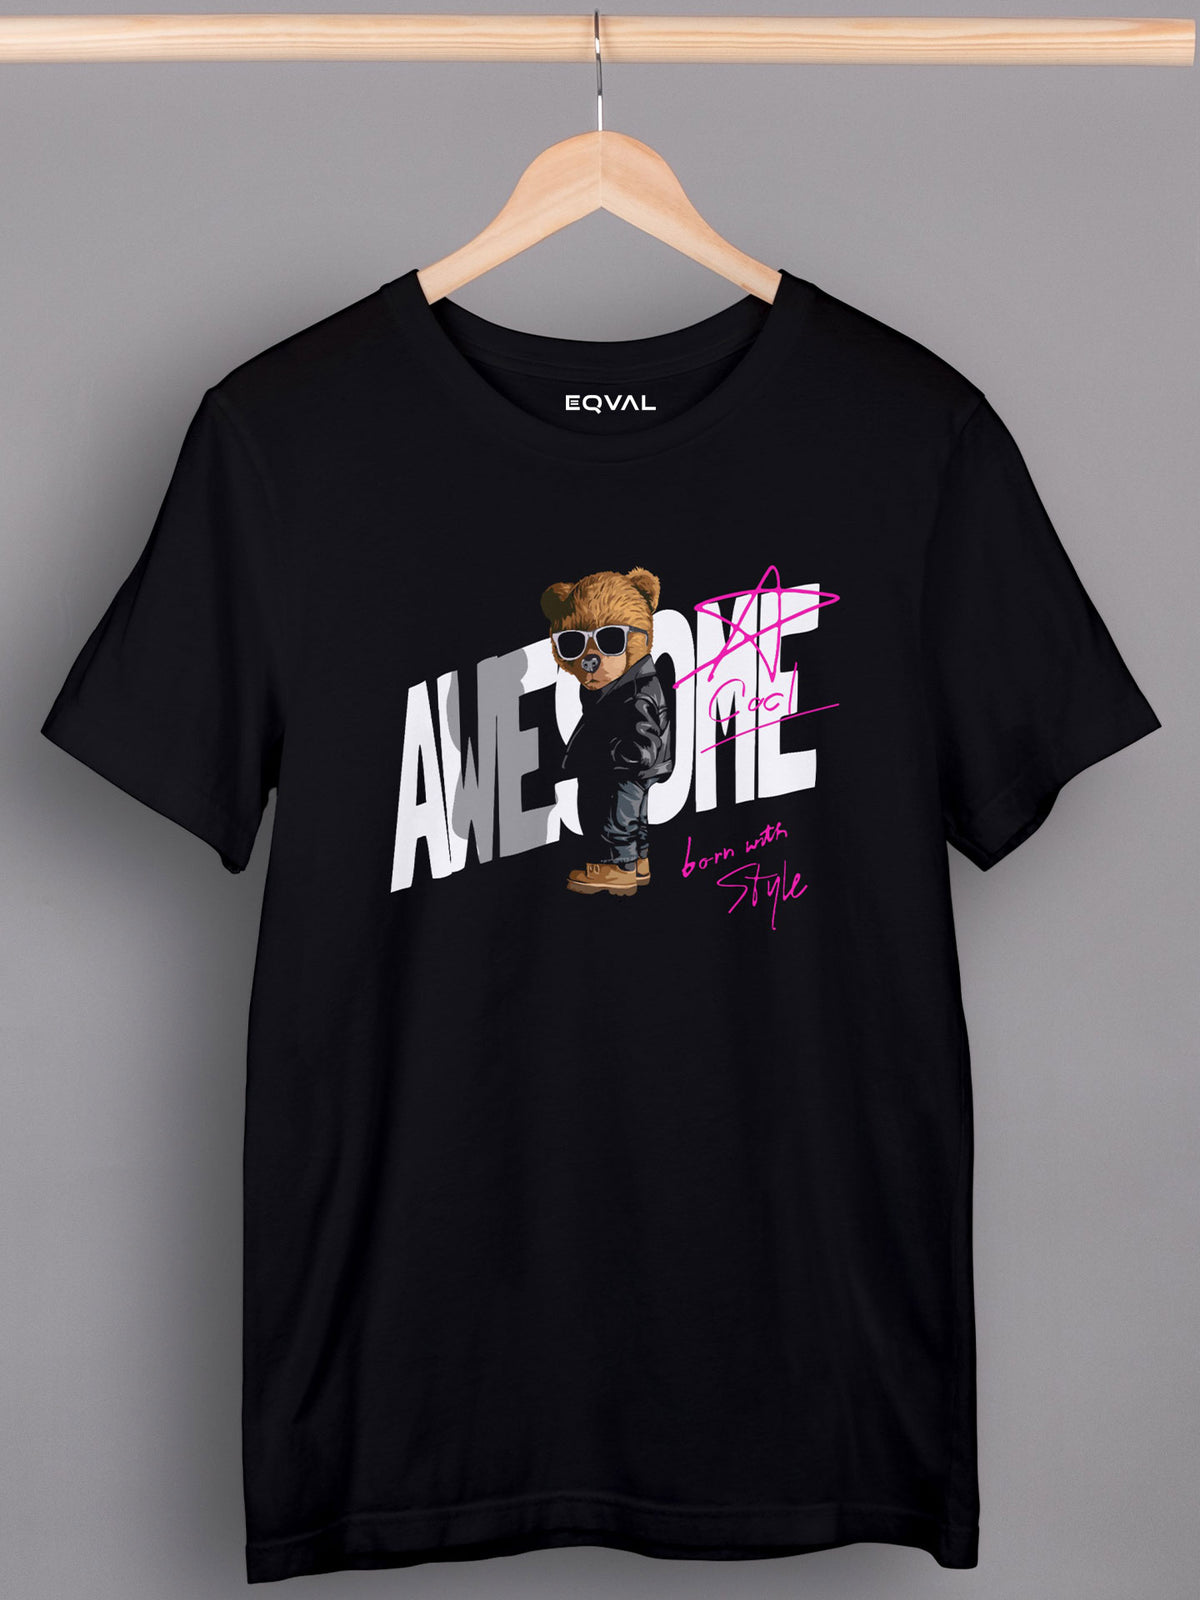 Men's Black Awesome Printed T-shirt